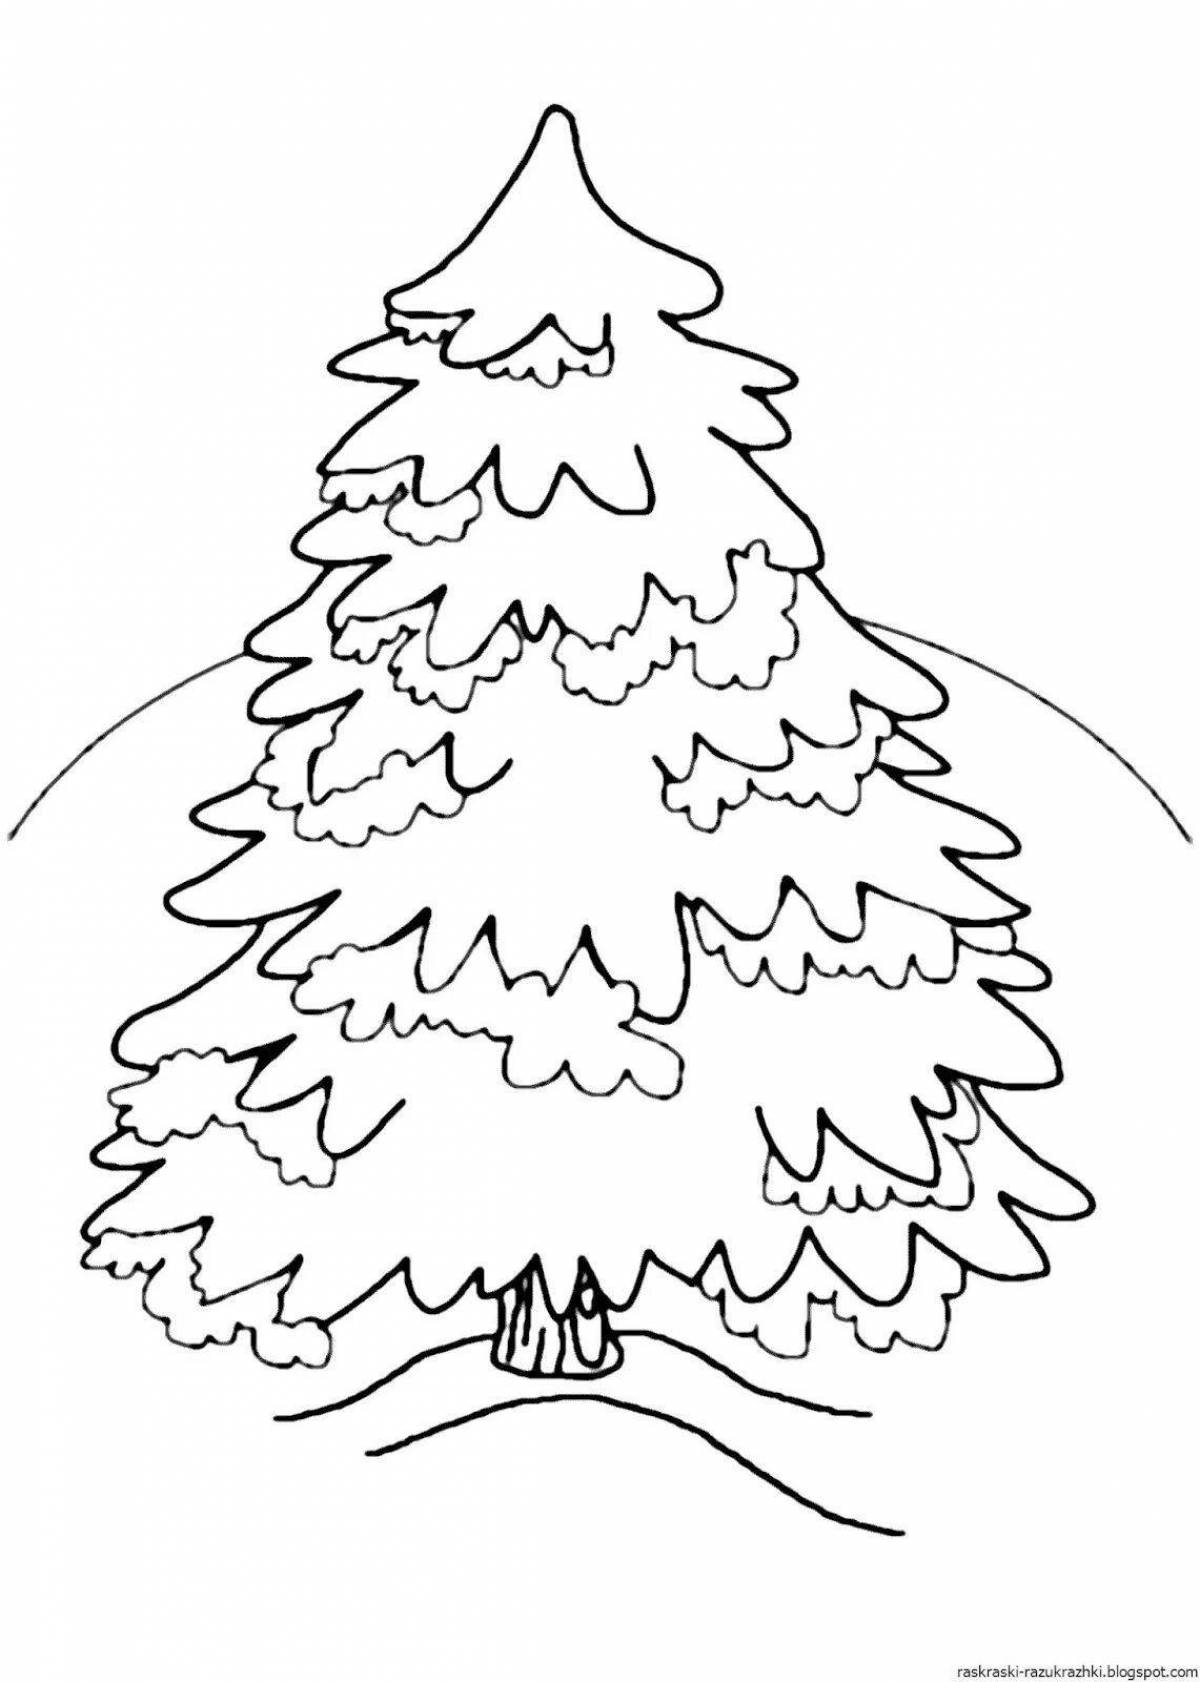 Joyful tree coloring page